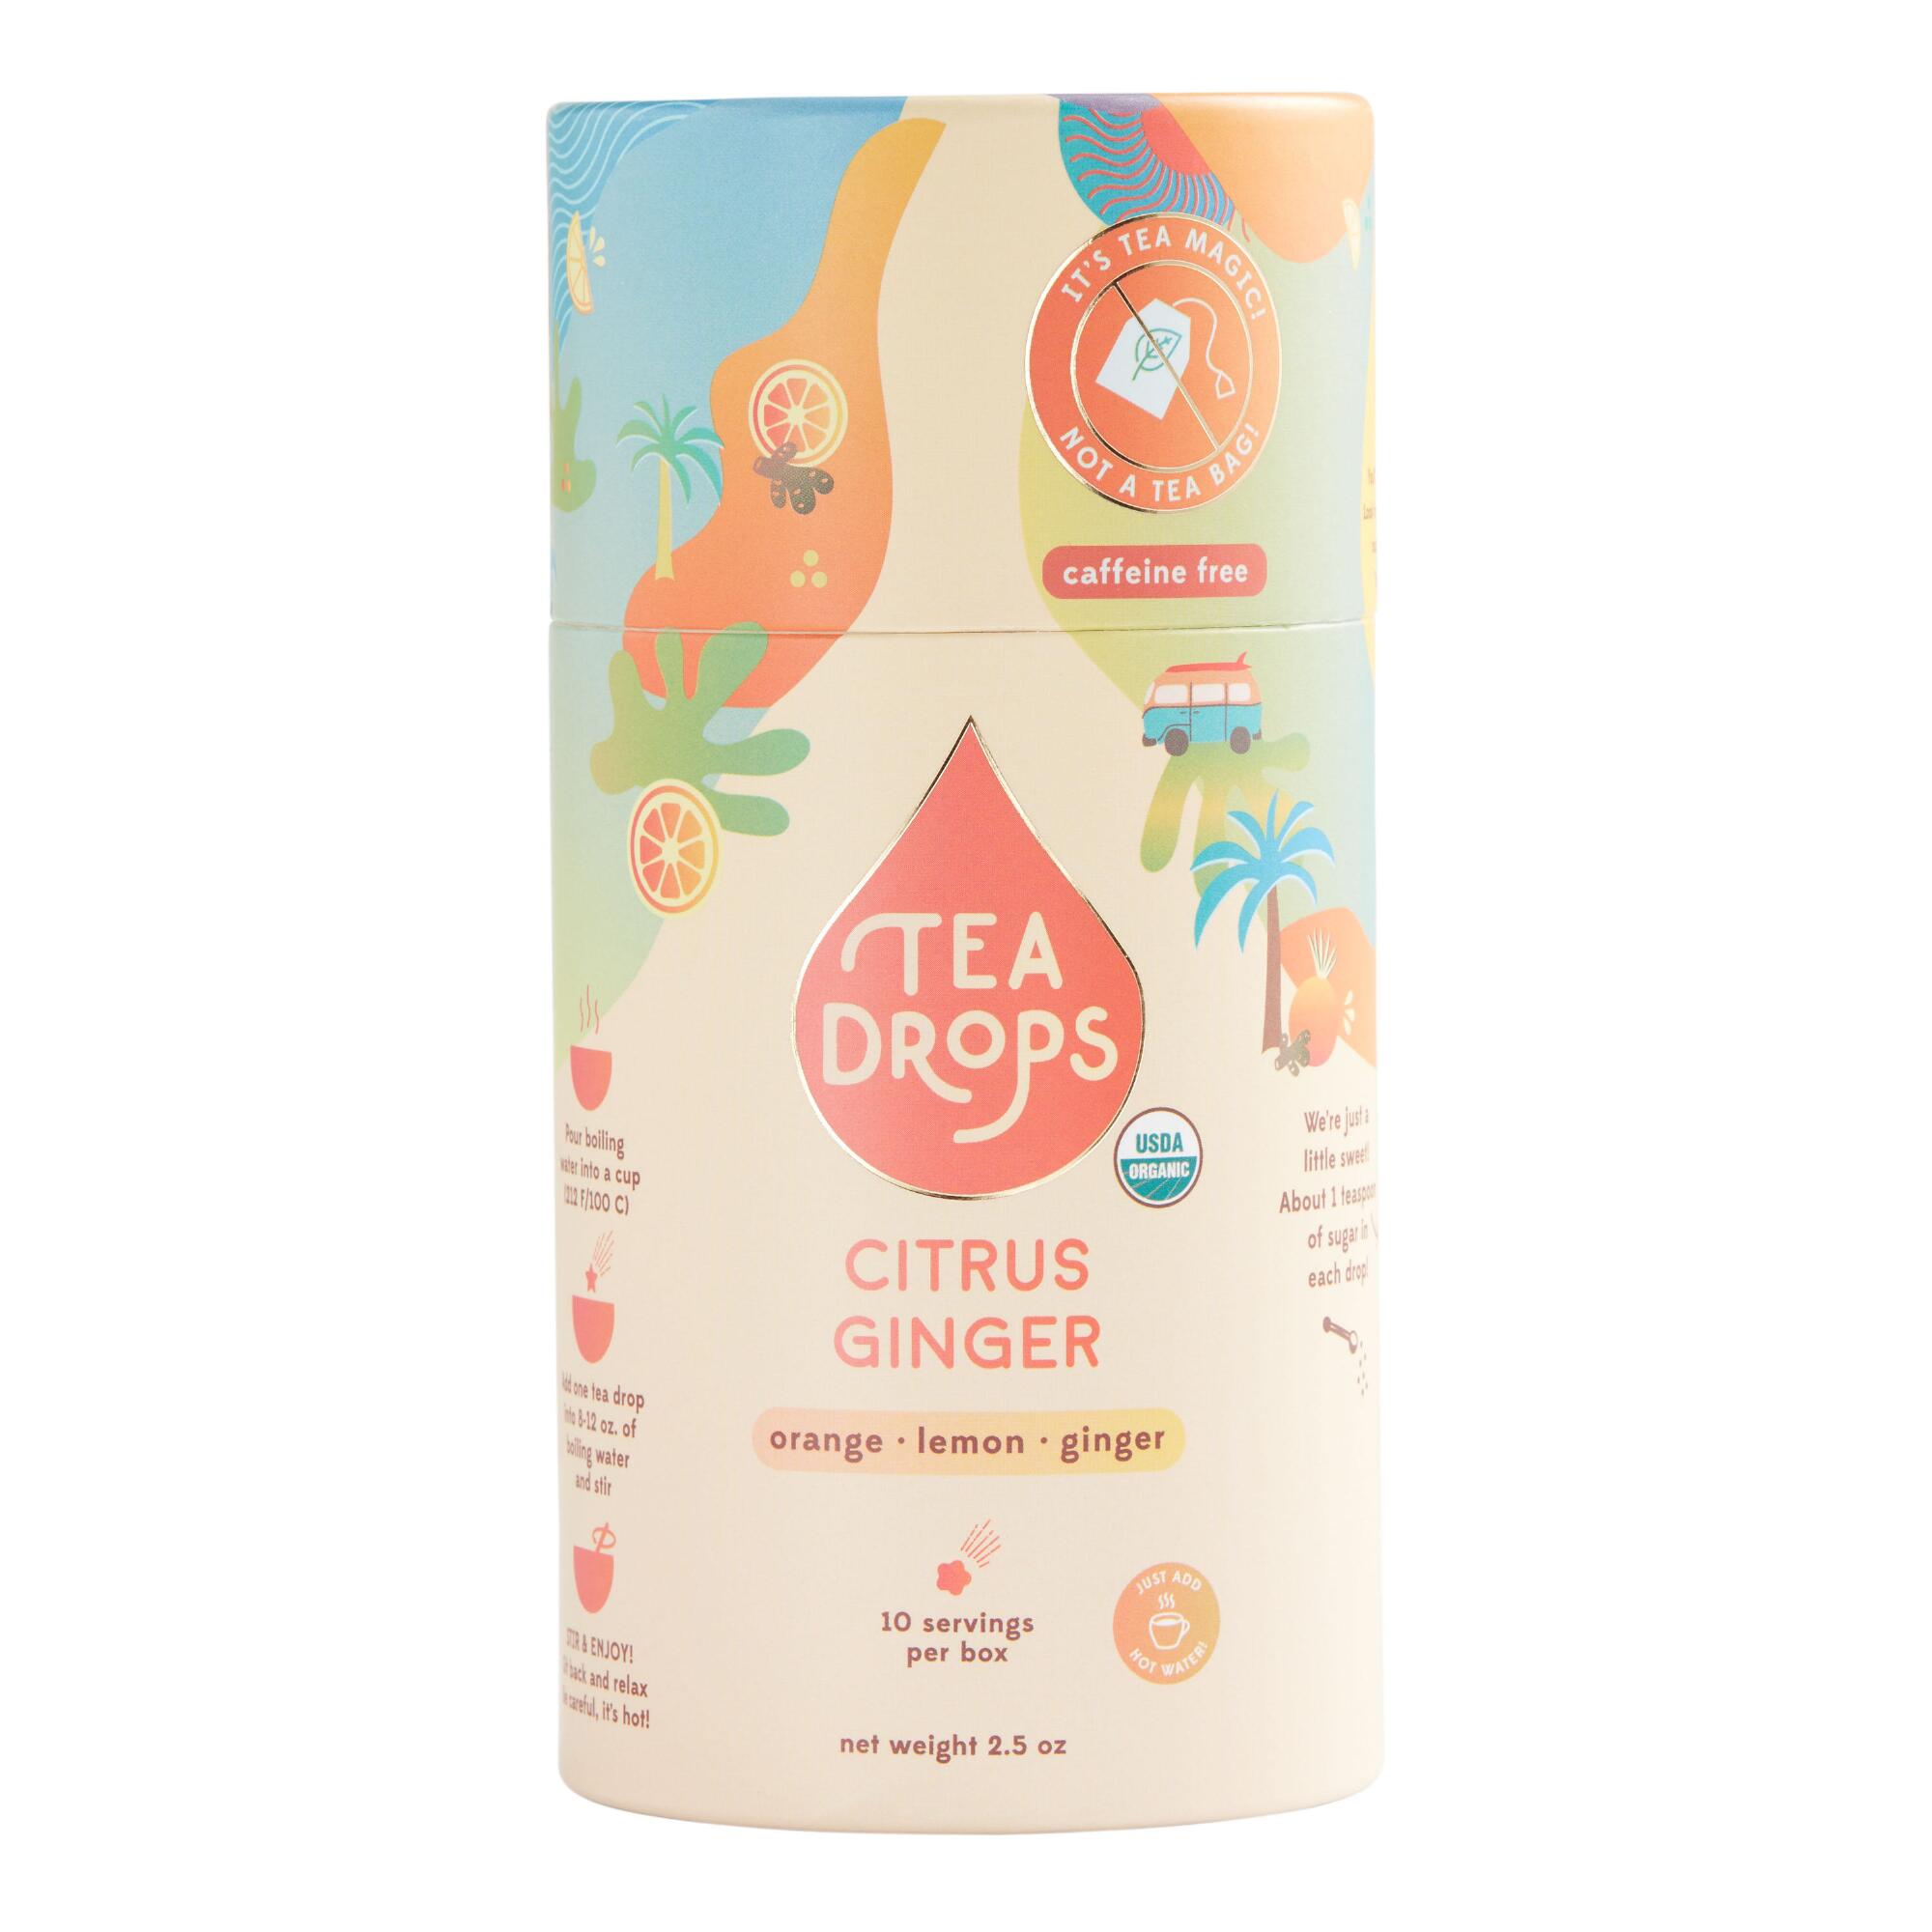 Tea Drops Citrus Ginger Tea 10 Count by World Market